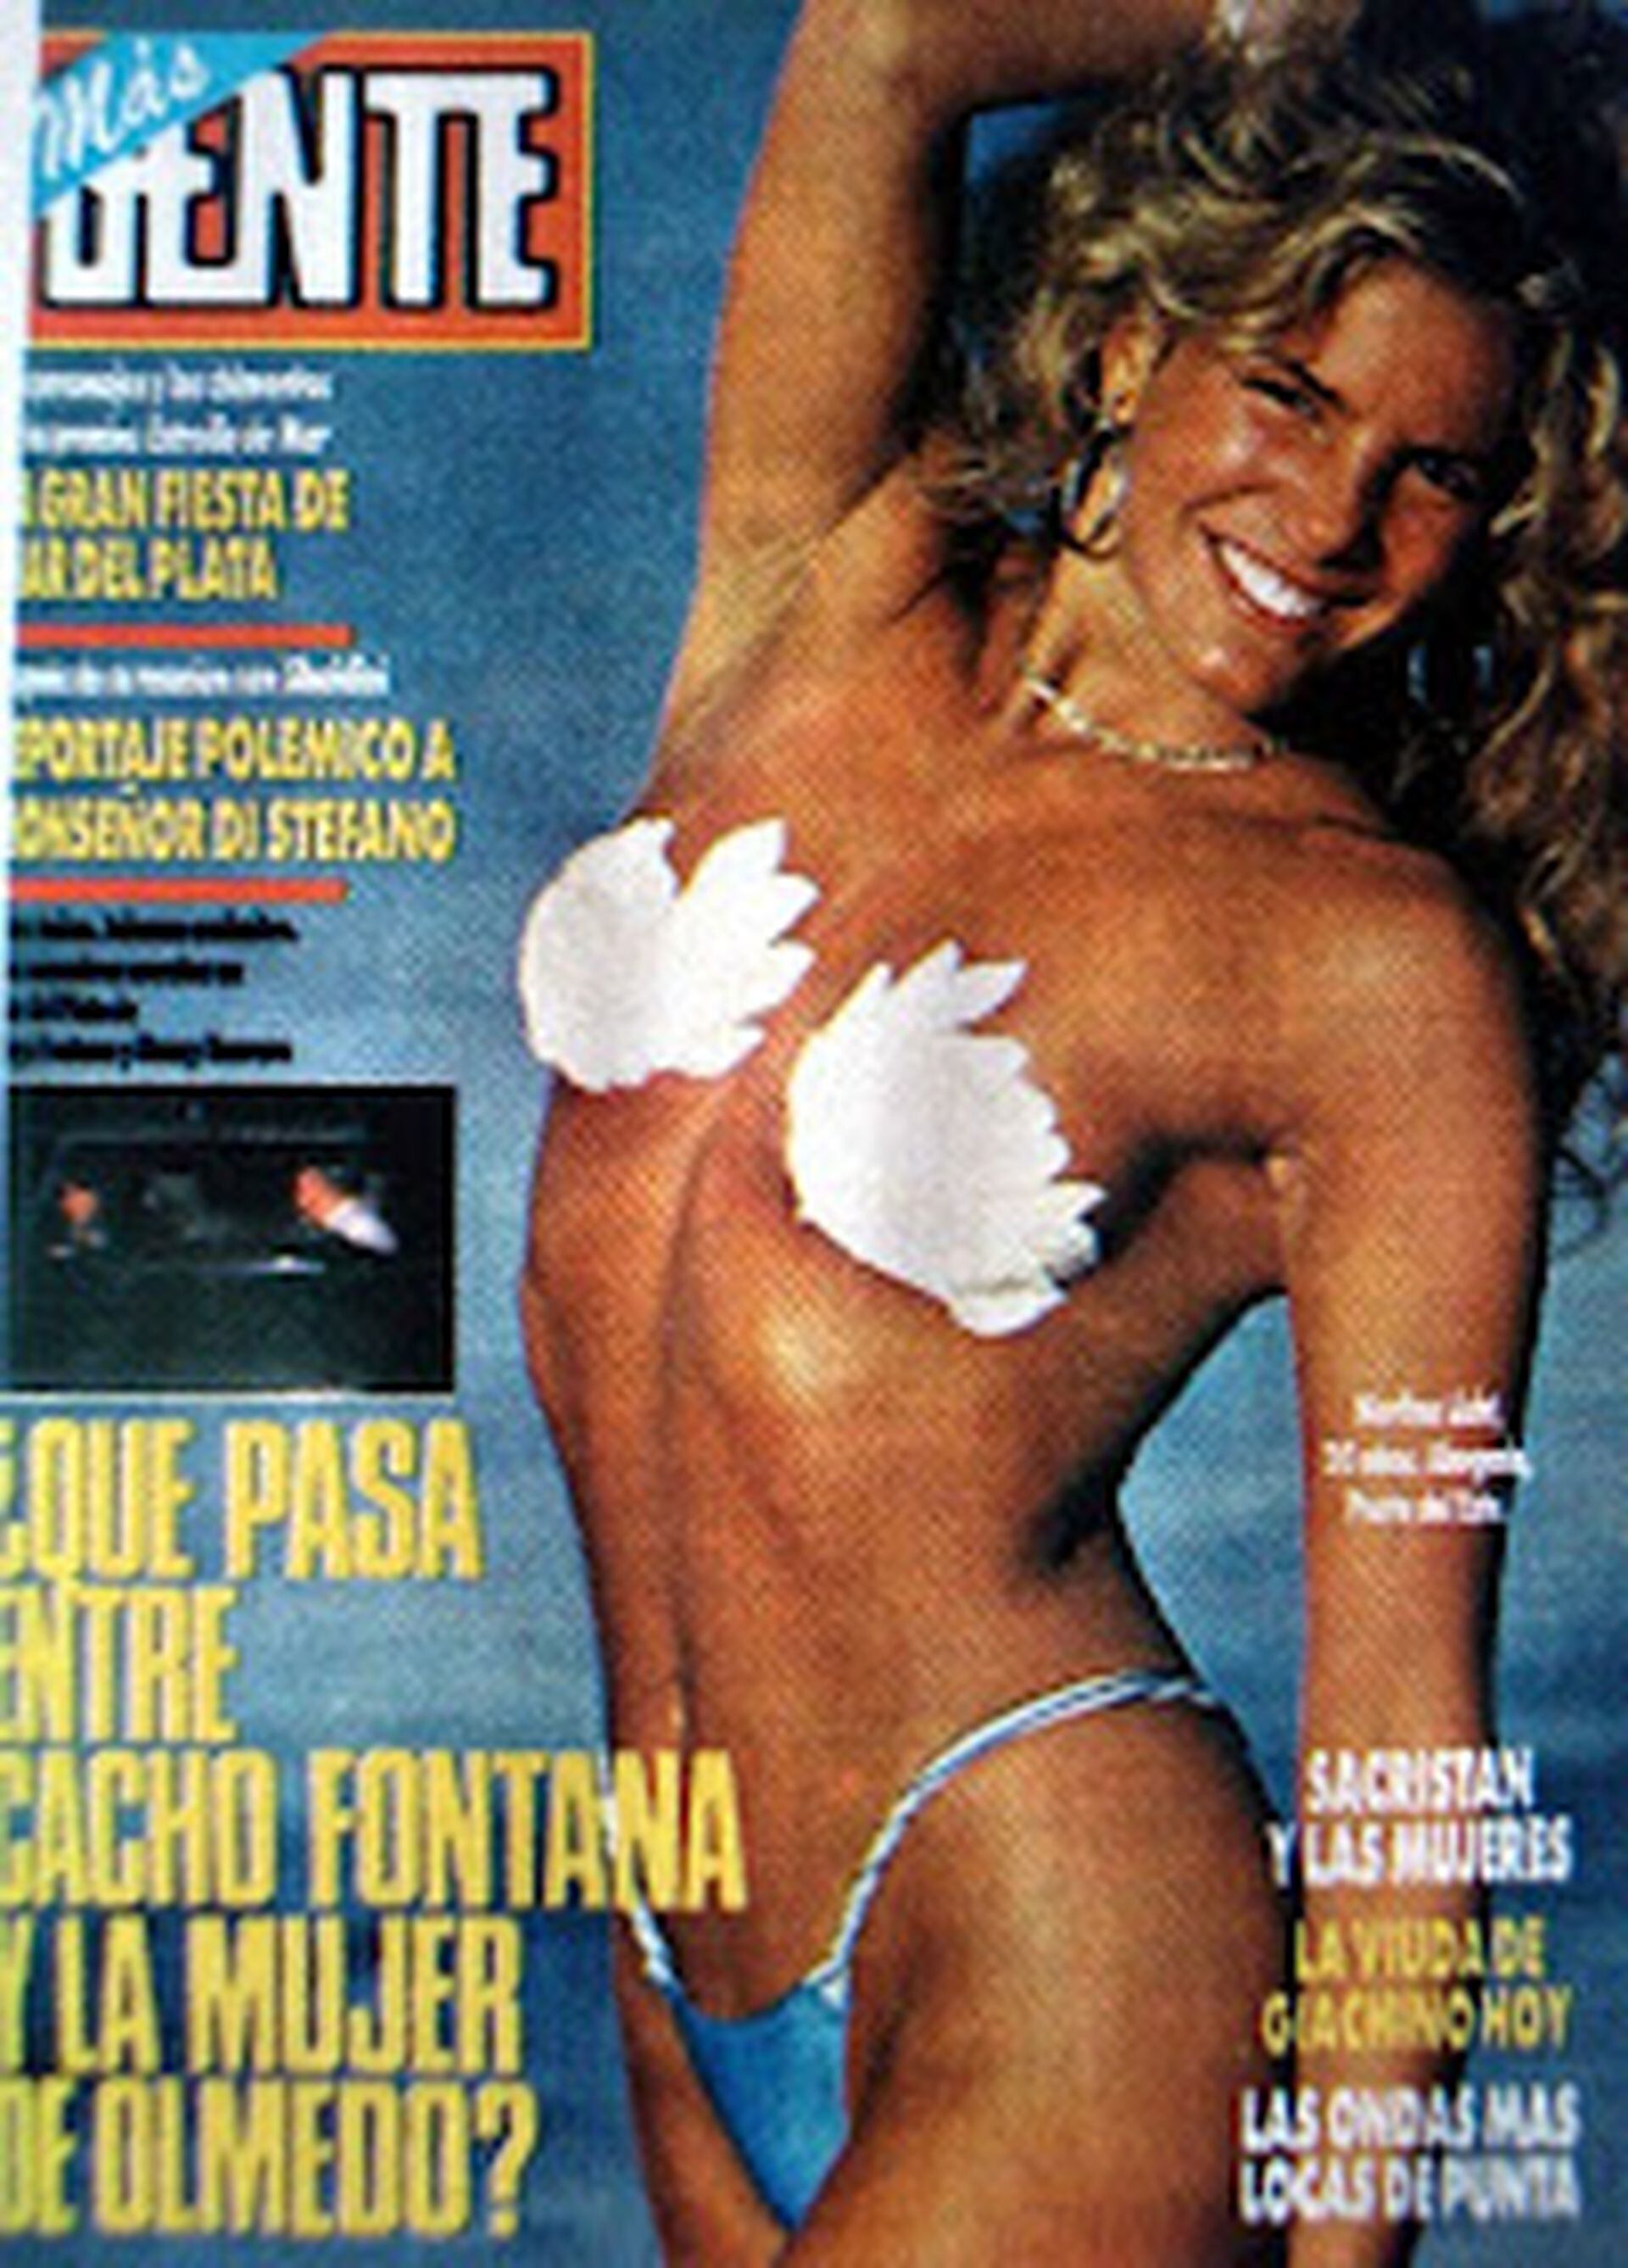 Tendencia de verano. Merlina Licht con "top stickers", 1987